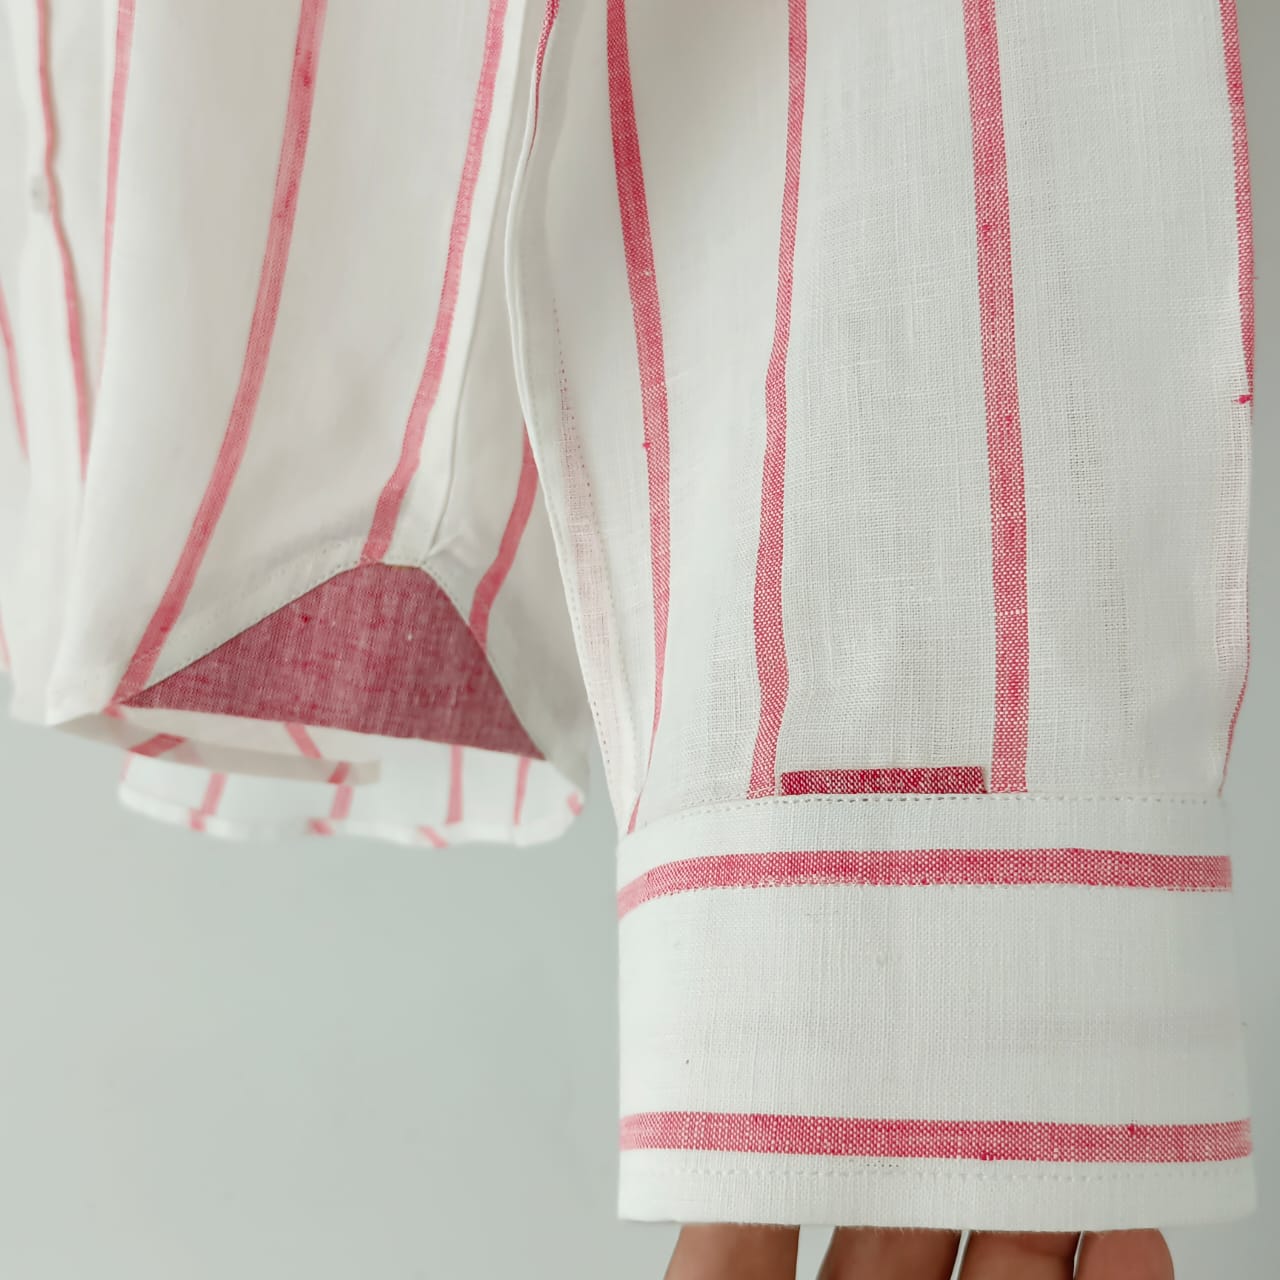 Pink Broad Stripes Linen Shirt